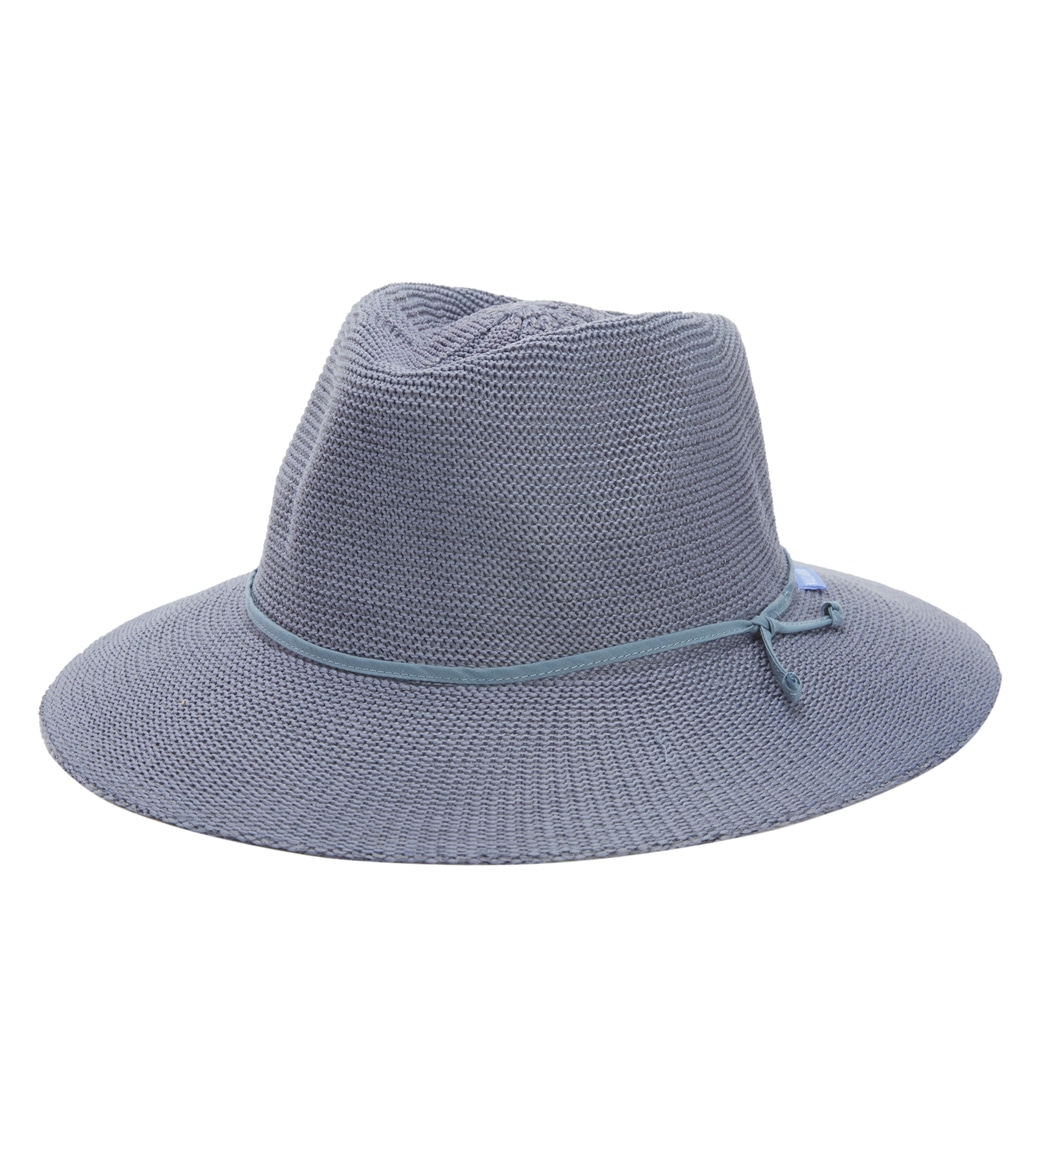 Wallaroo Women's Victoria Fedora Hat - Dusty Blue One Size - Swimoutlet.com